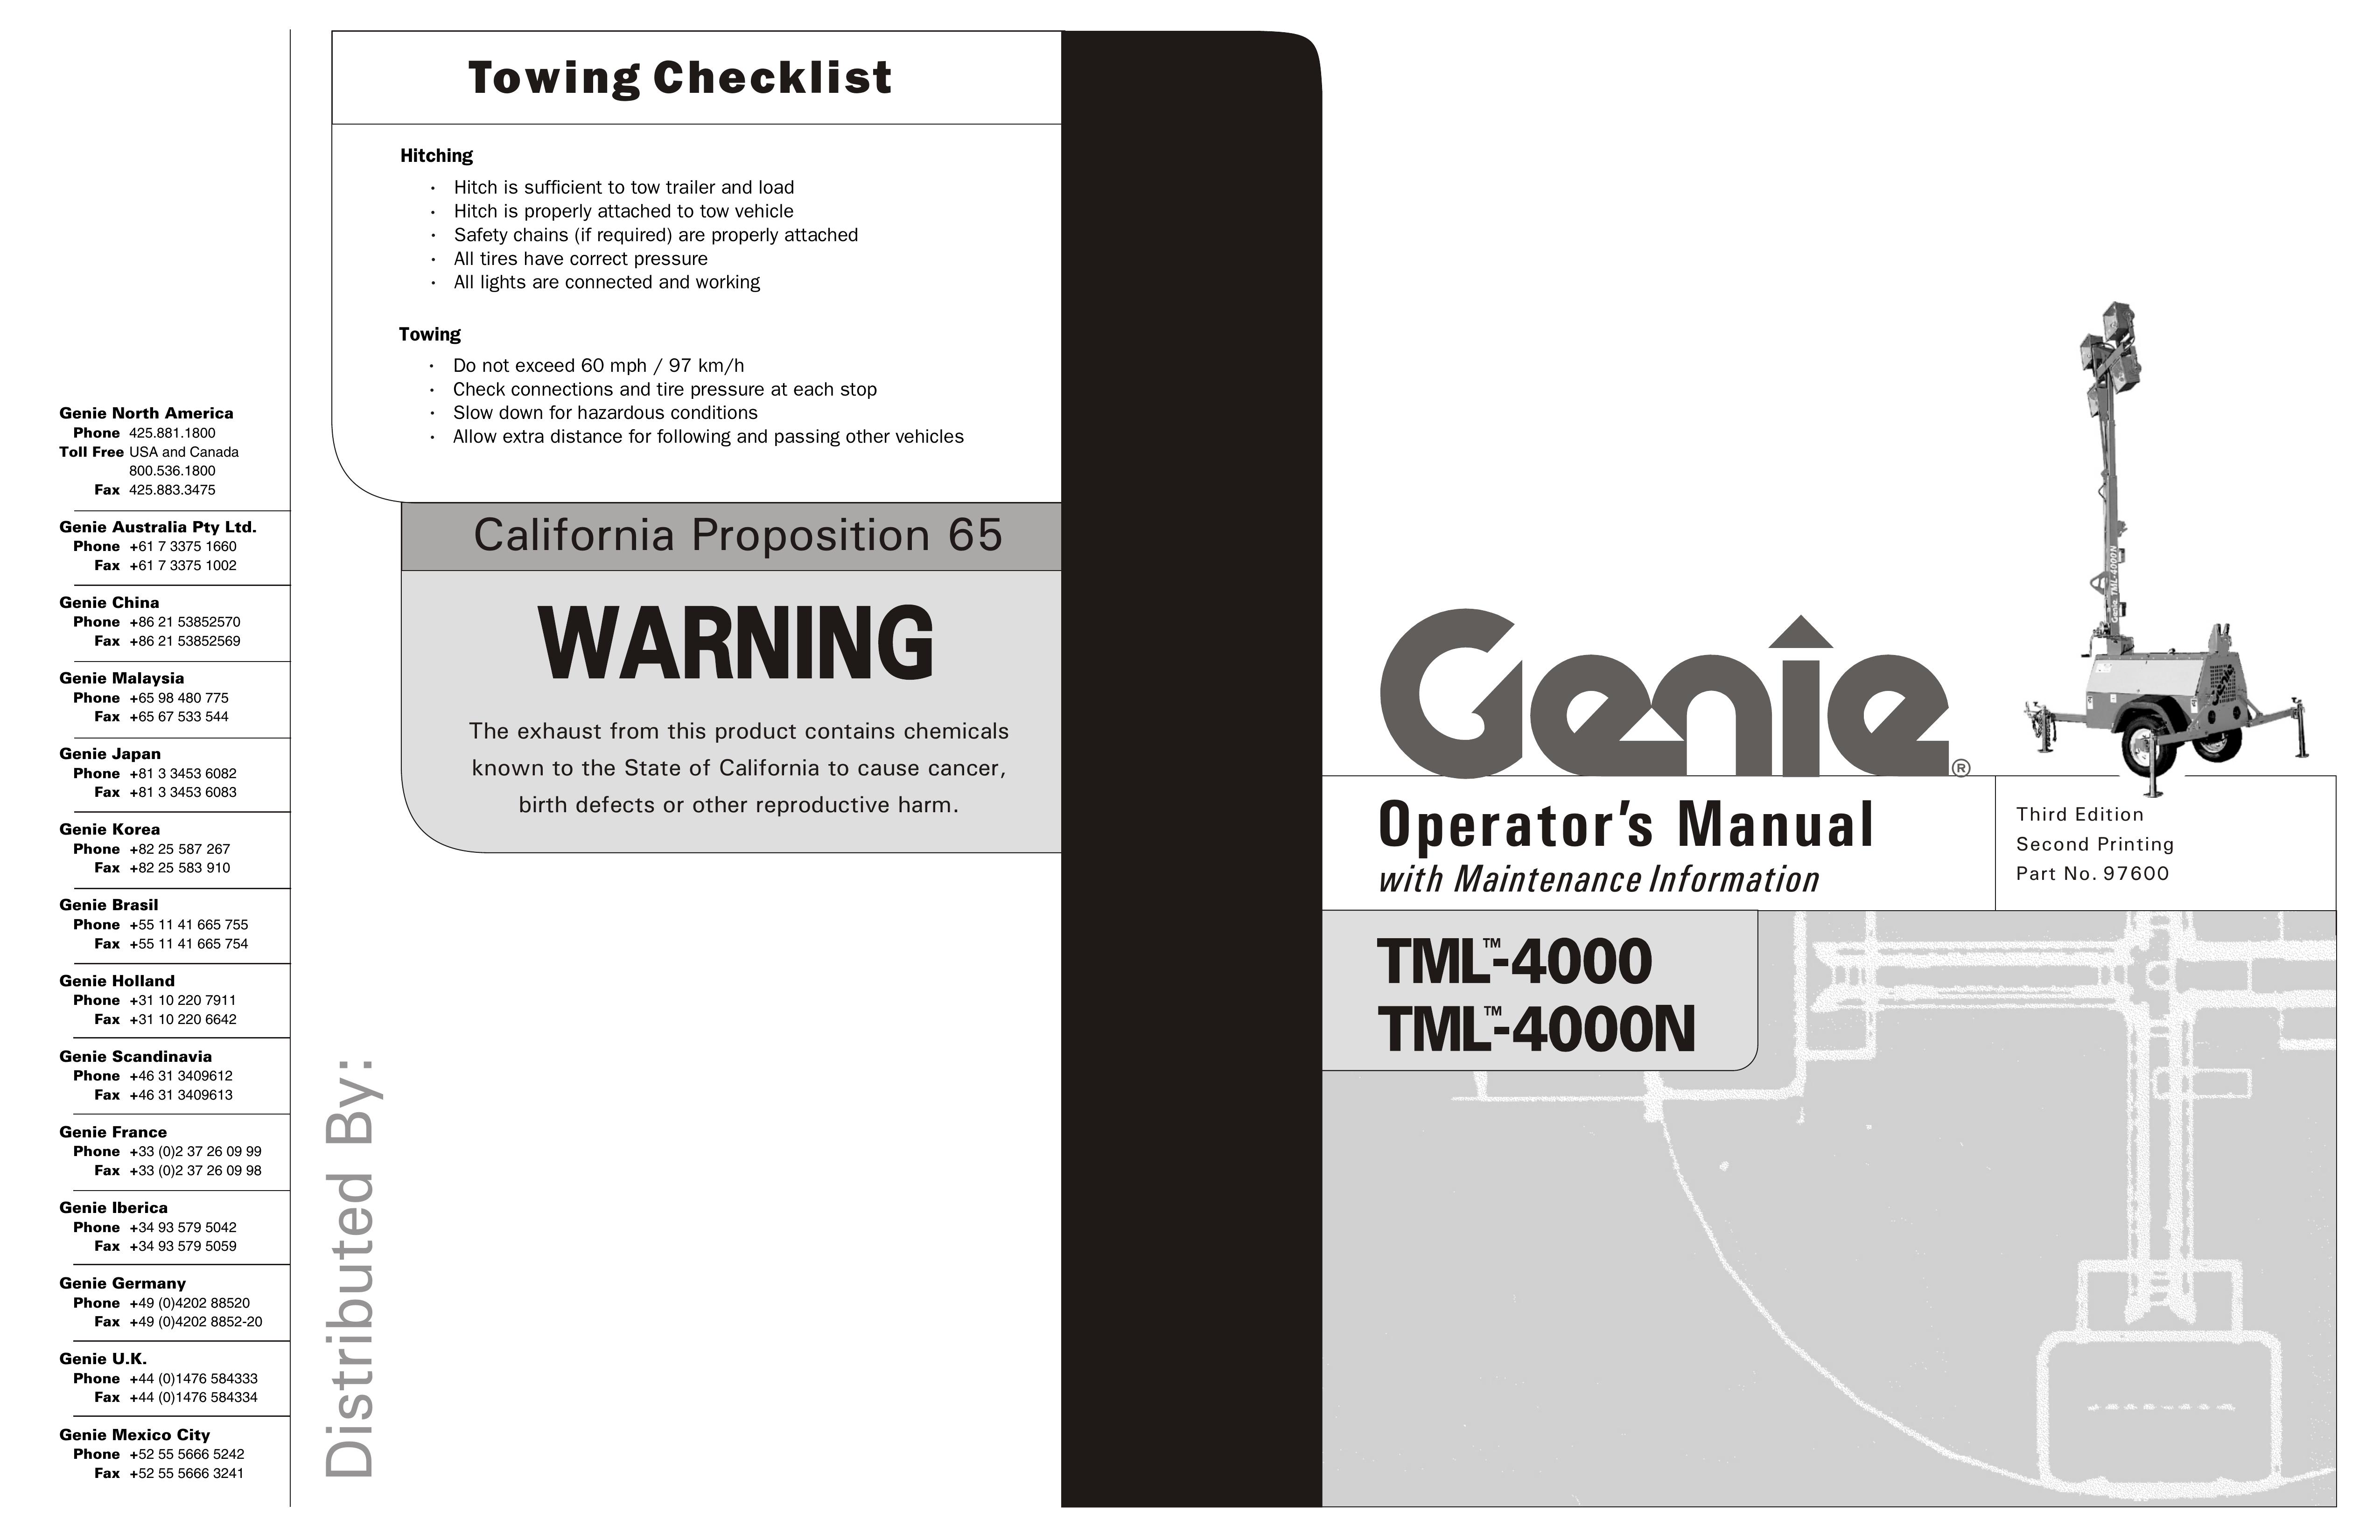 Genie TML-4000N Portable Generator User Manual